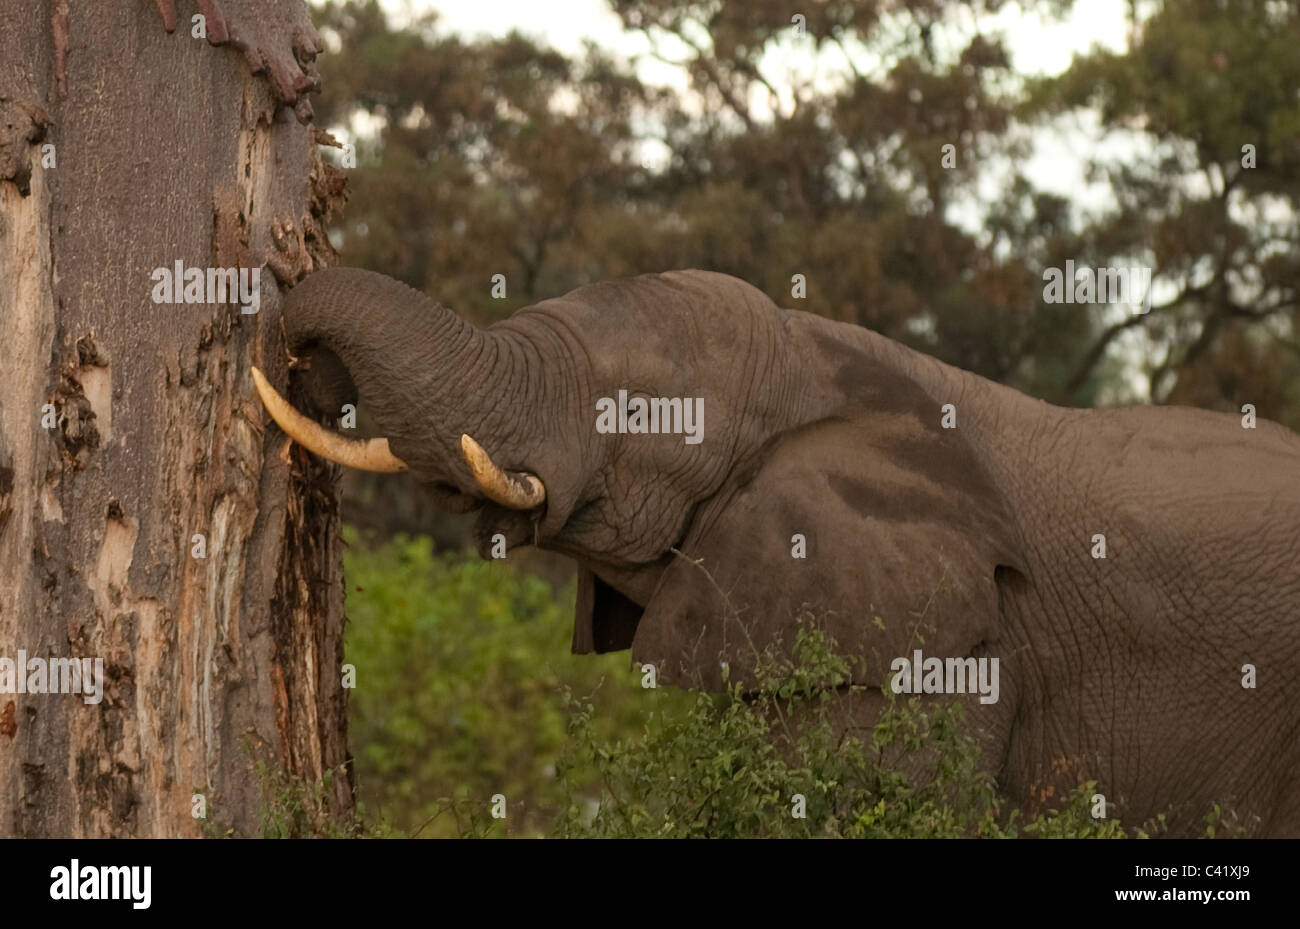 Bull elefante africano pelar la corteza de árbol baobab Adansonia digitata Foto de stock